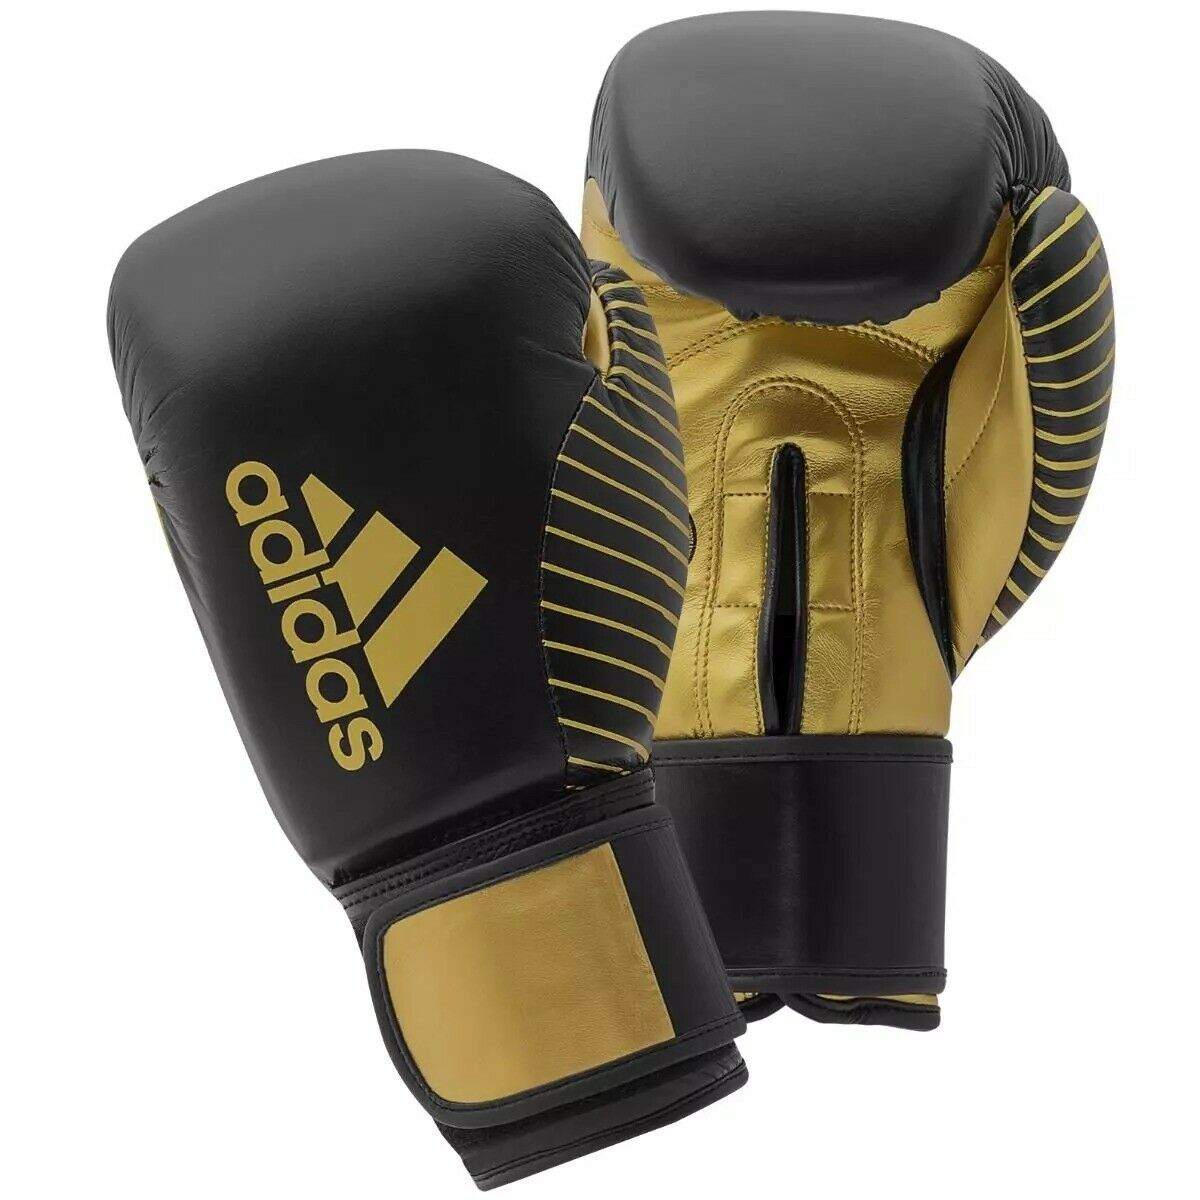 adidas Kickboxing Gloves Leather Boxing 10 oz